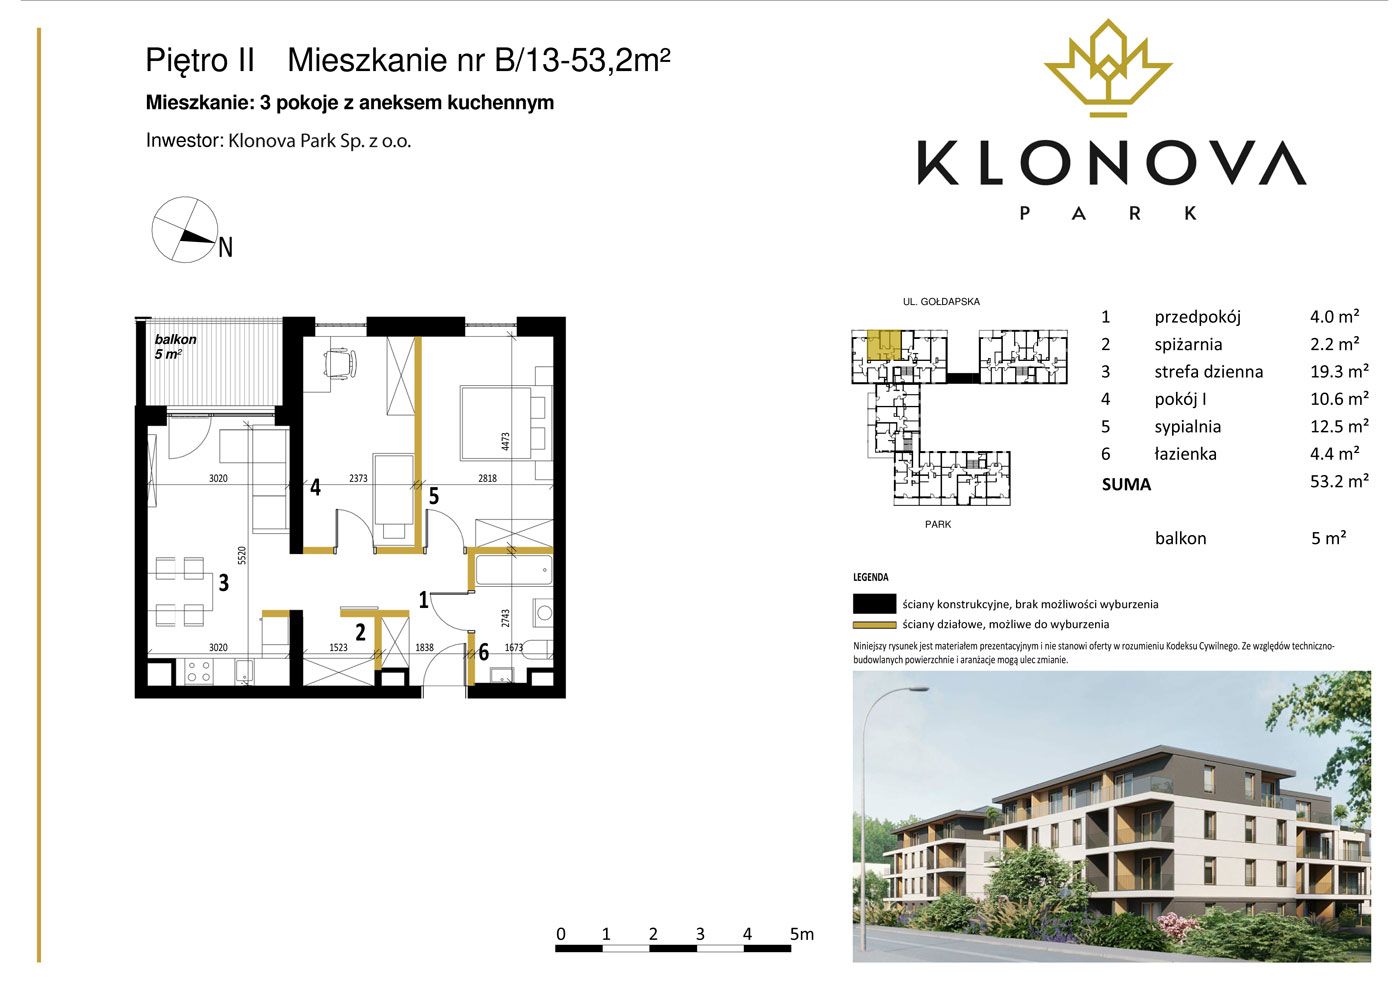 Apartamenty Klonova Park - Plan mieszkania B/13